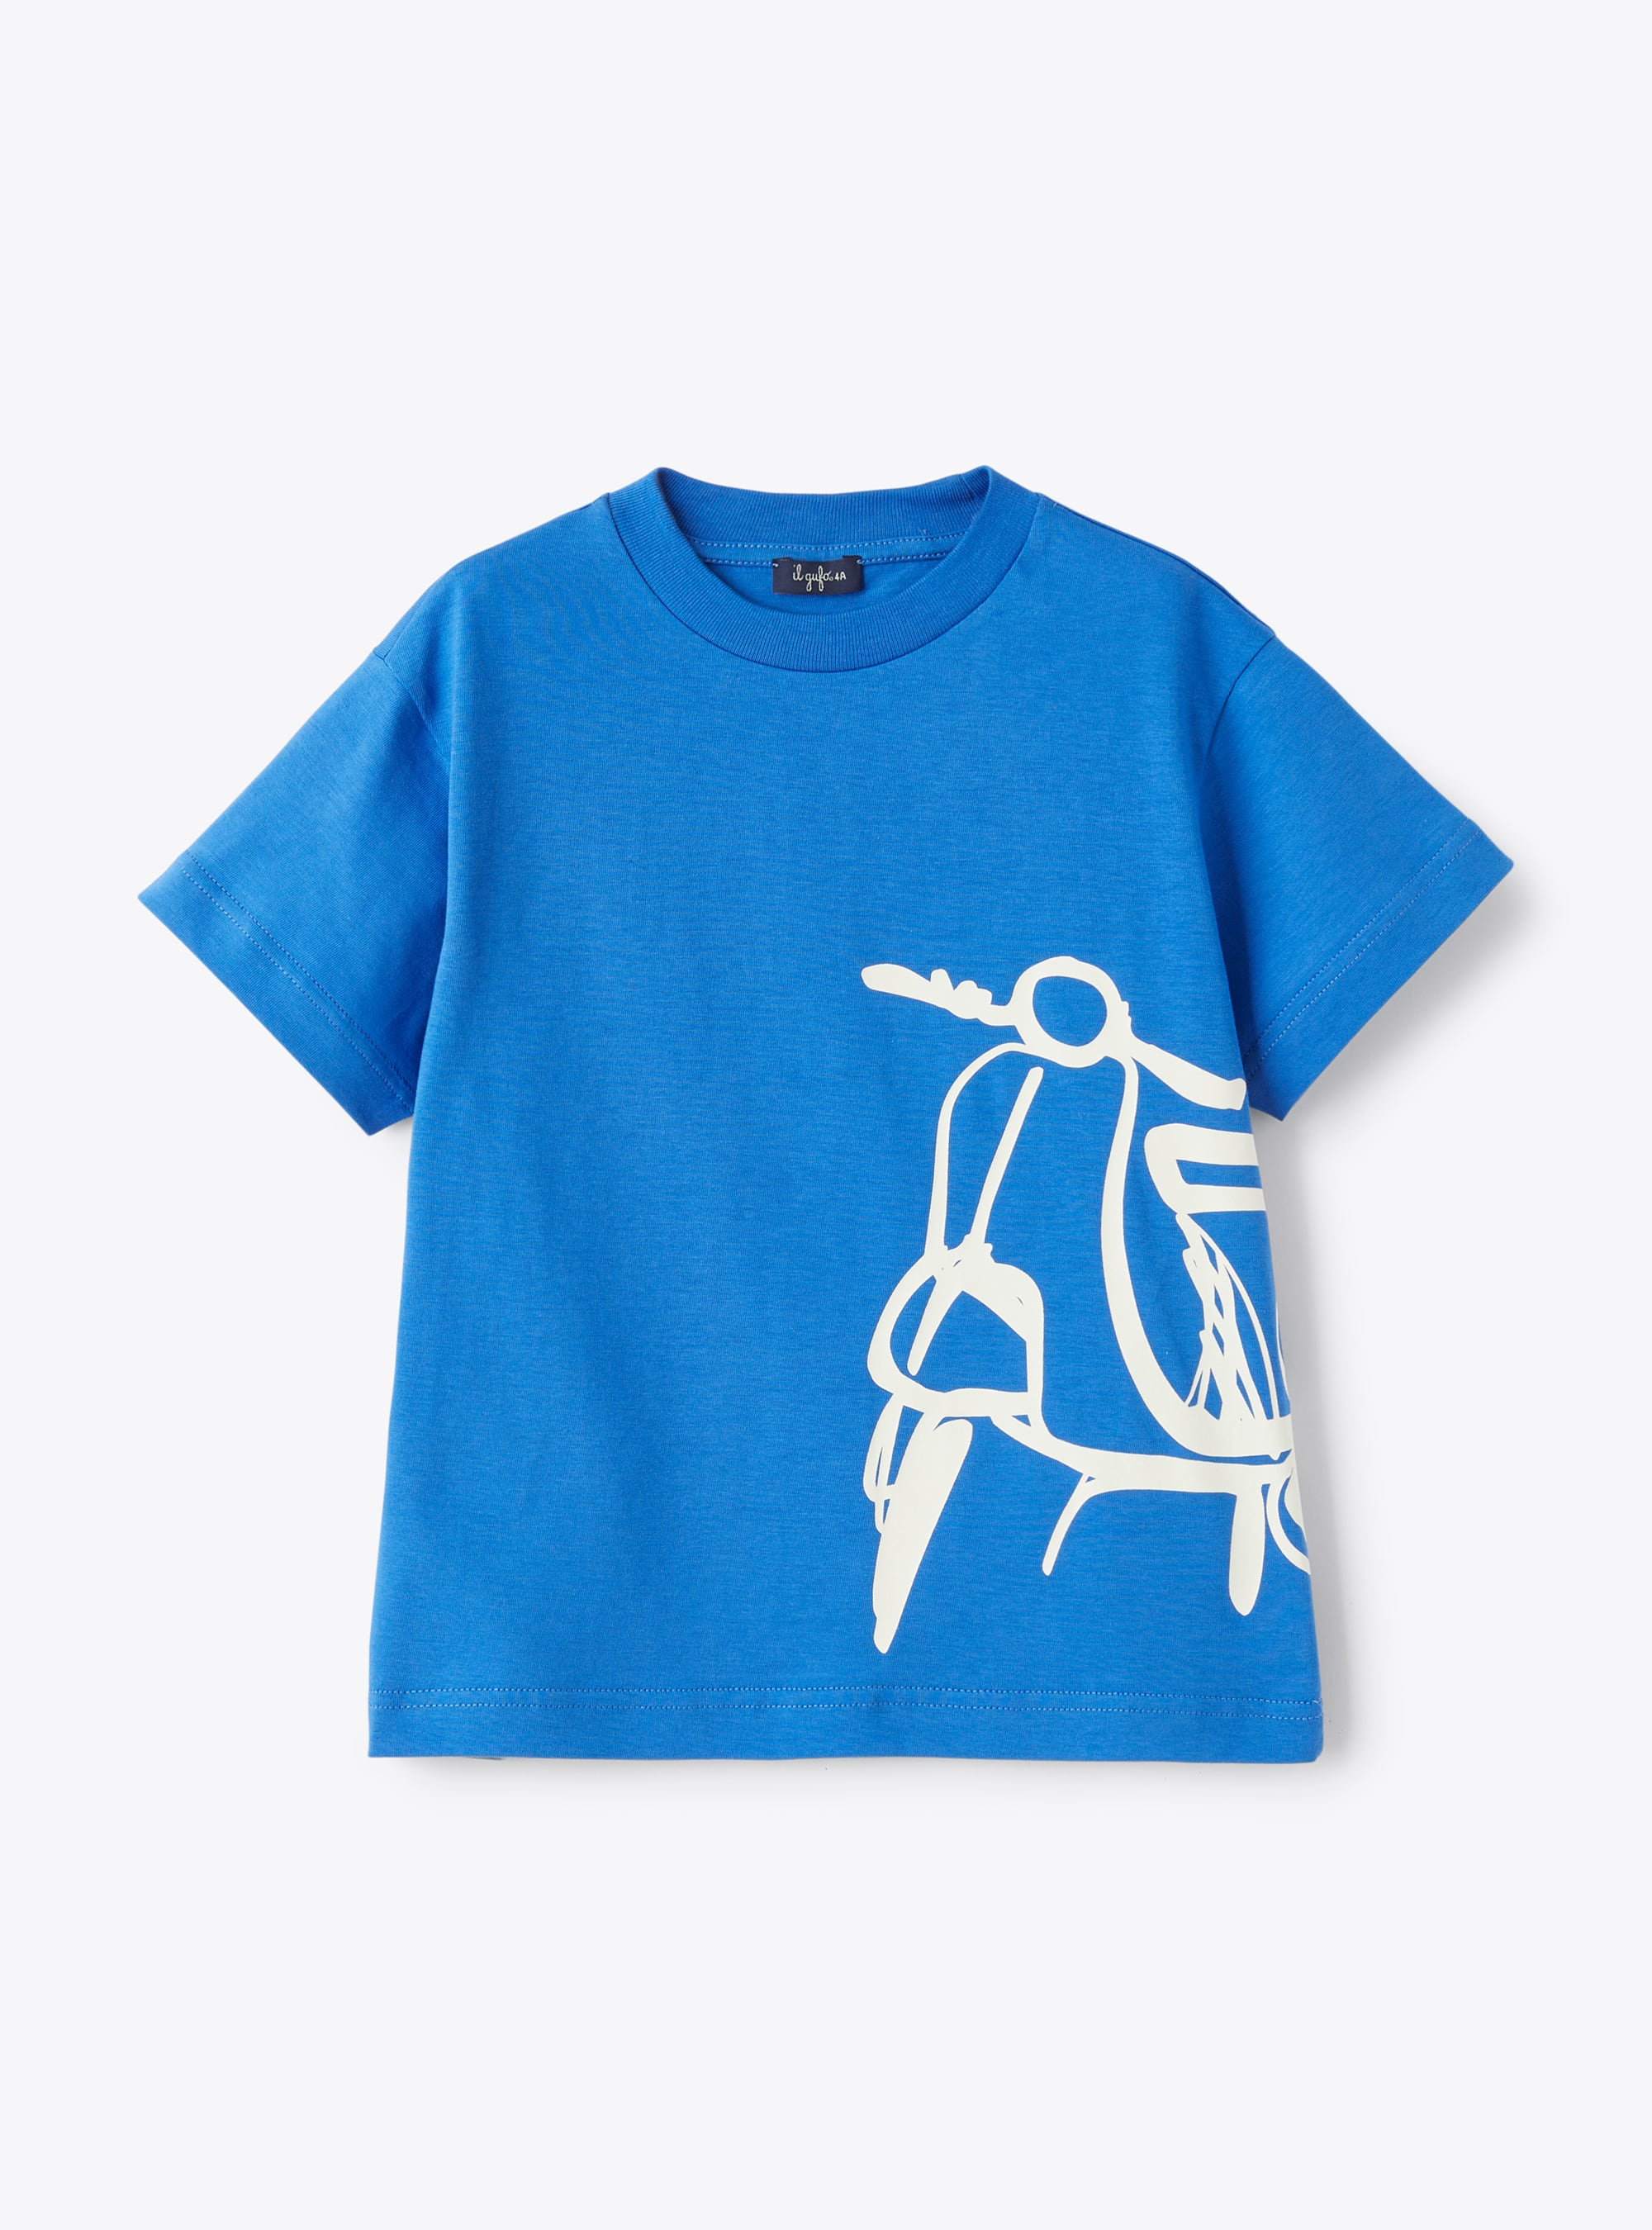 Cobalt-blue t-shirt with Vespa print design  - T-shirts - Il Gufo